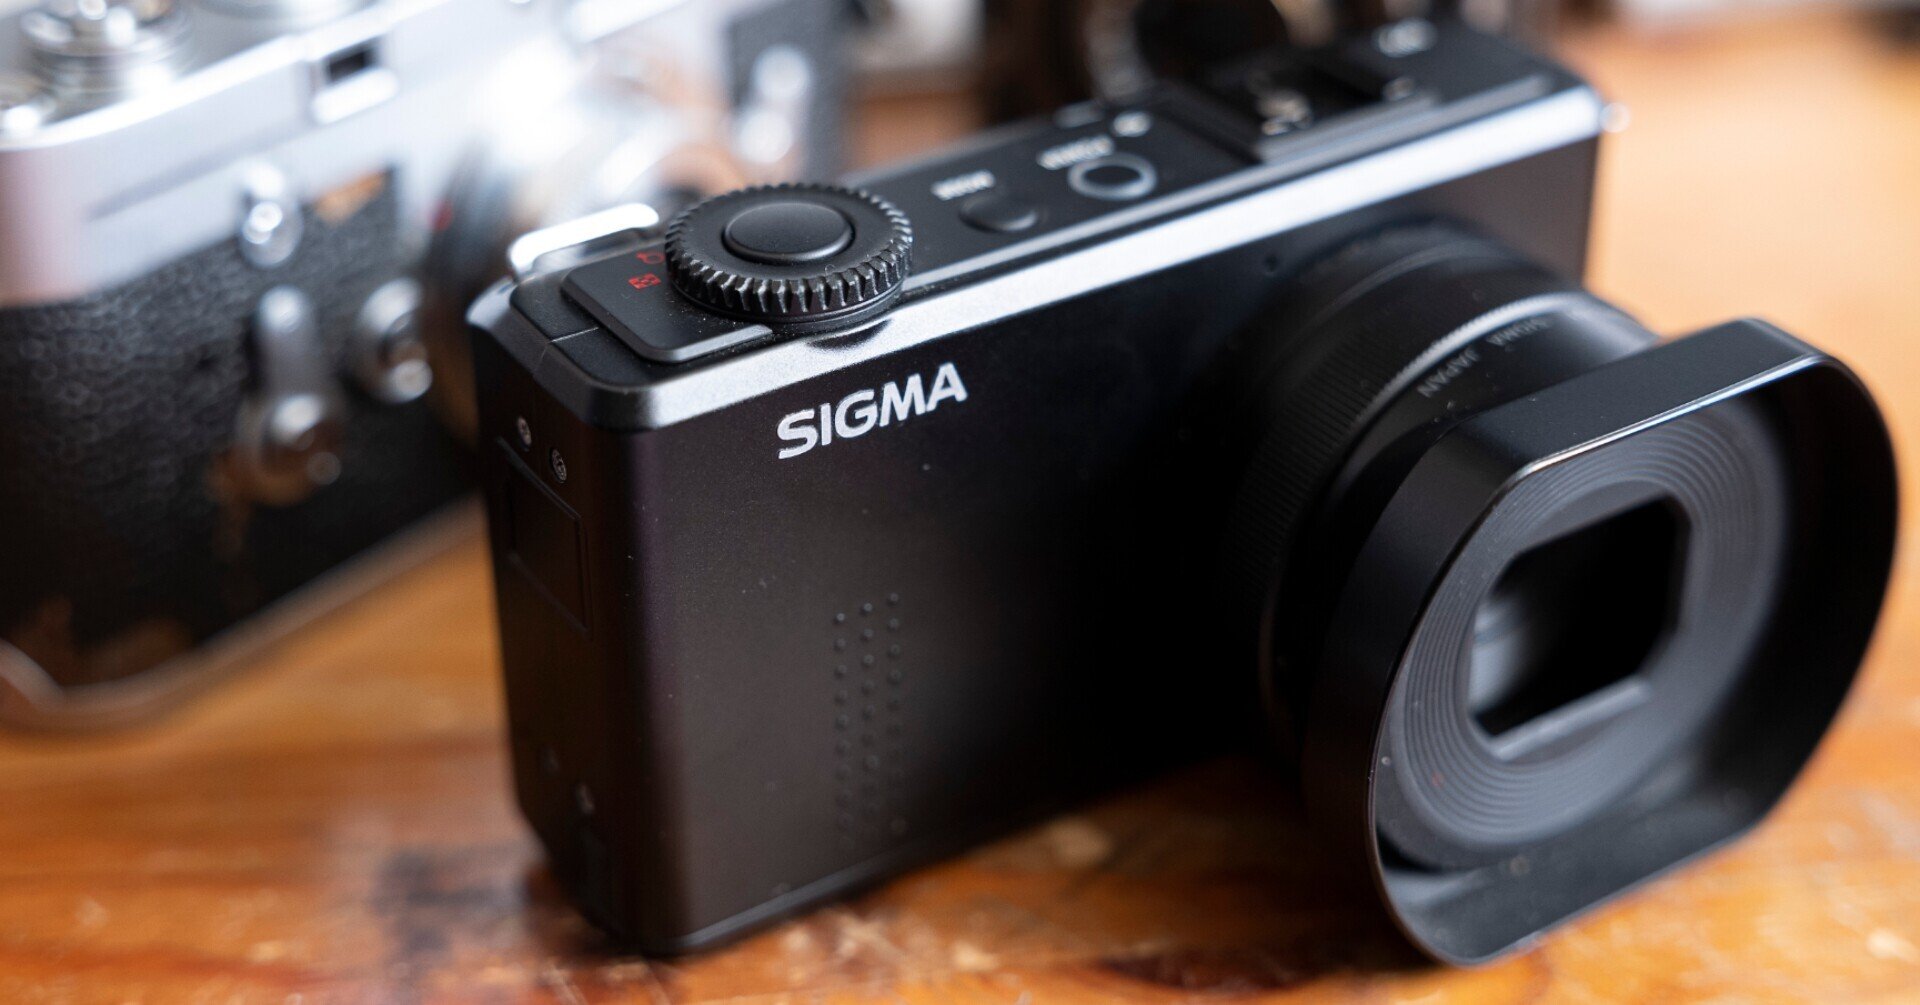 SIGMA DP2 MERRILL 付属品あり - デジタルカメラ